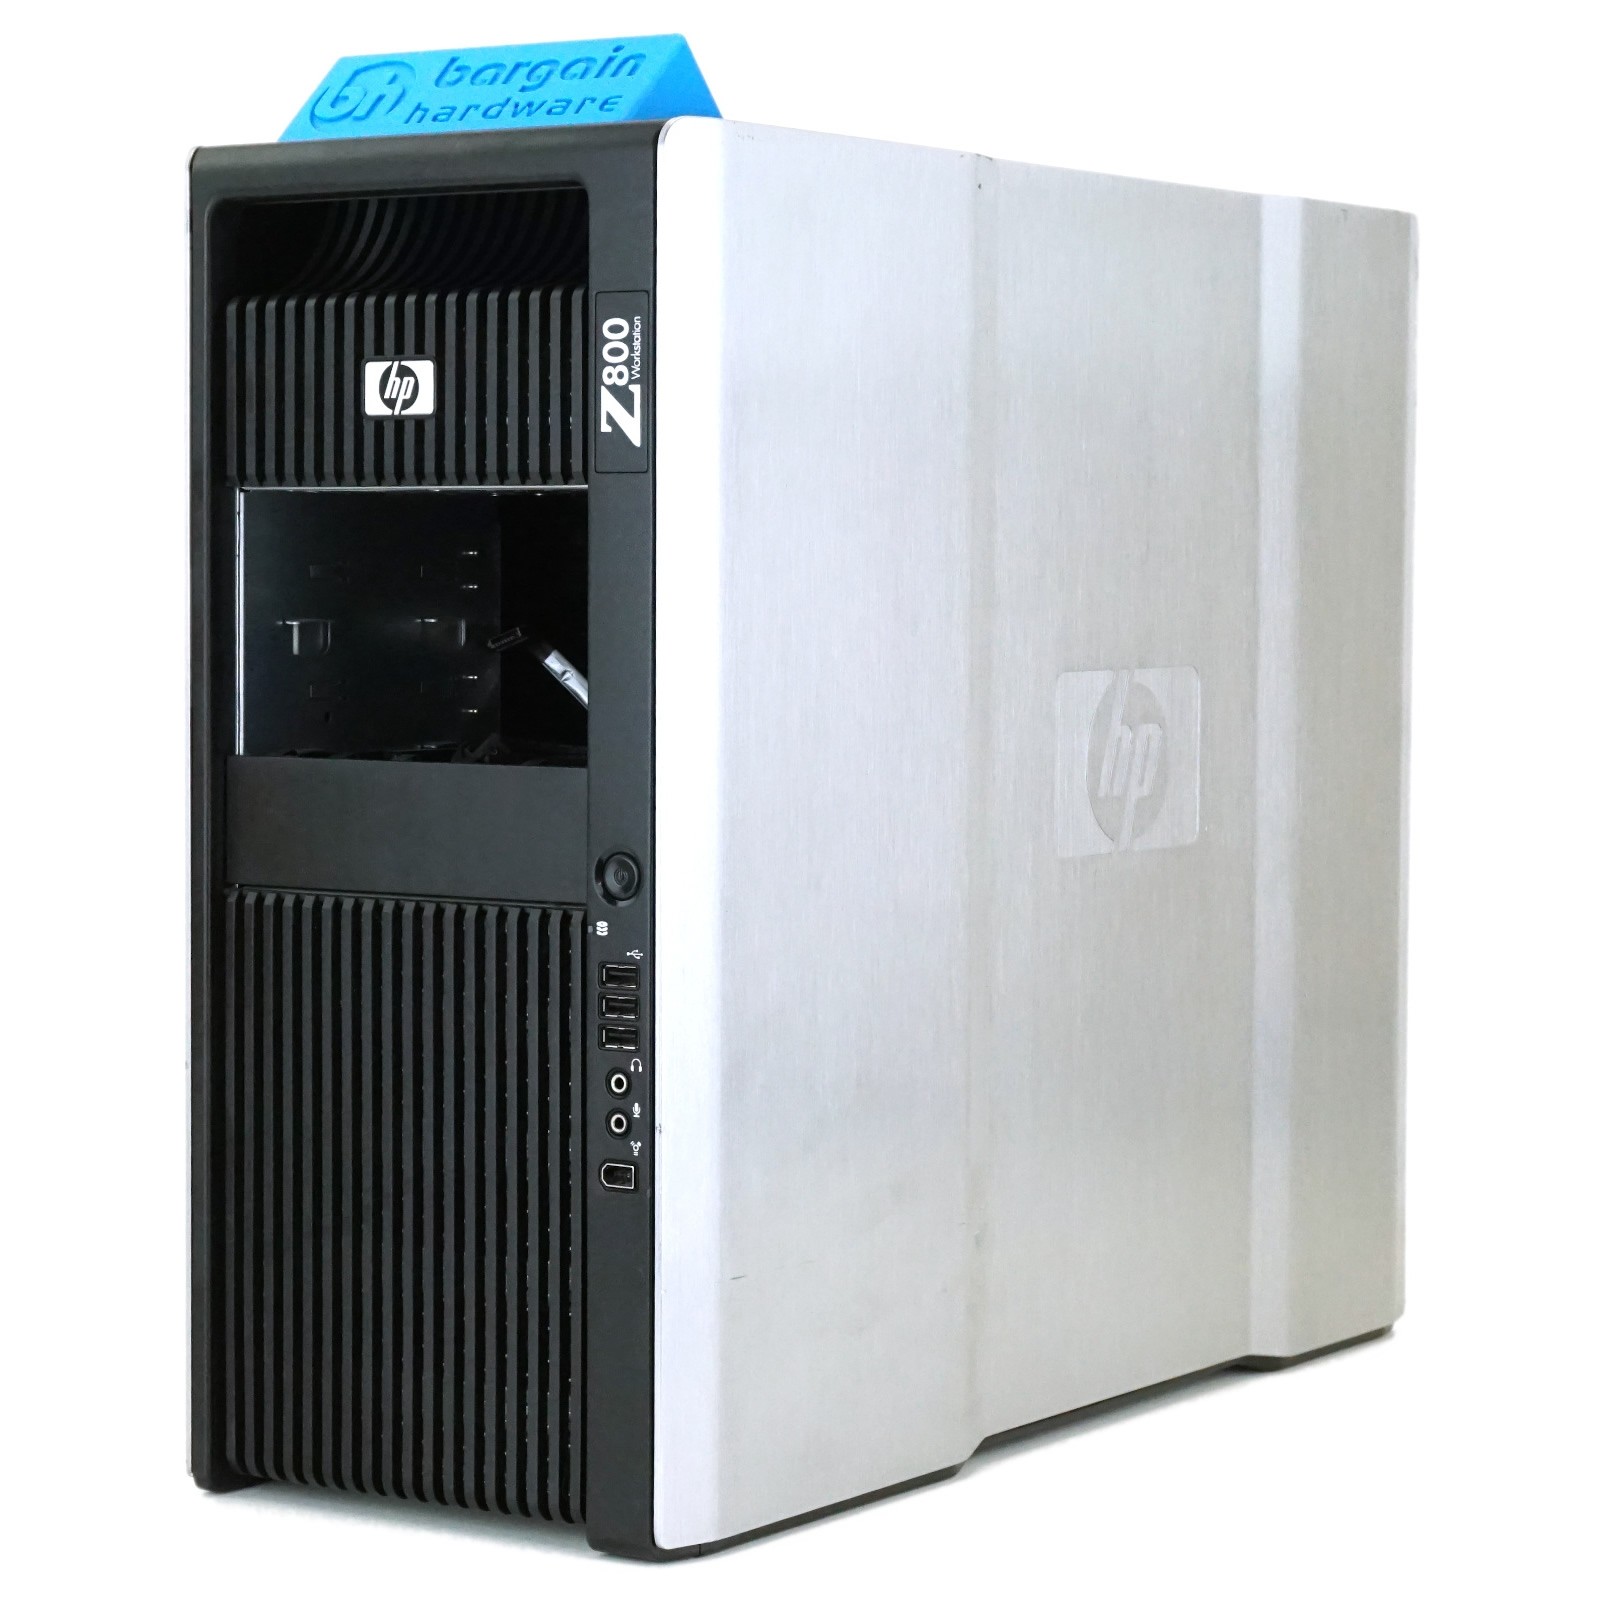 HP Z800 Xeon 55 Series Tower Workstation